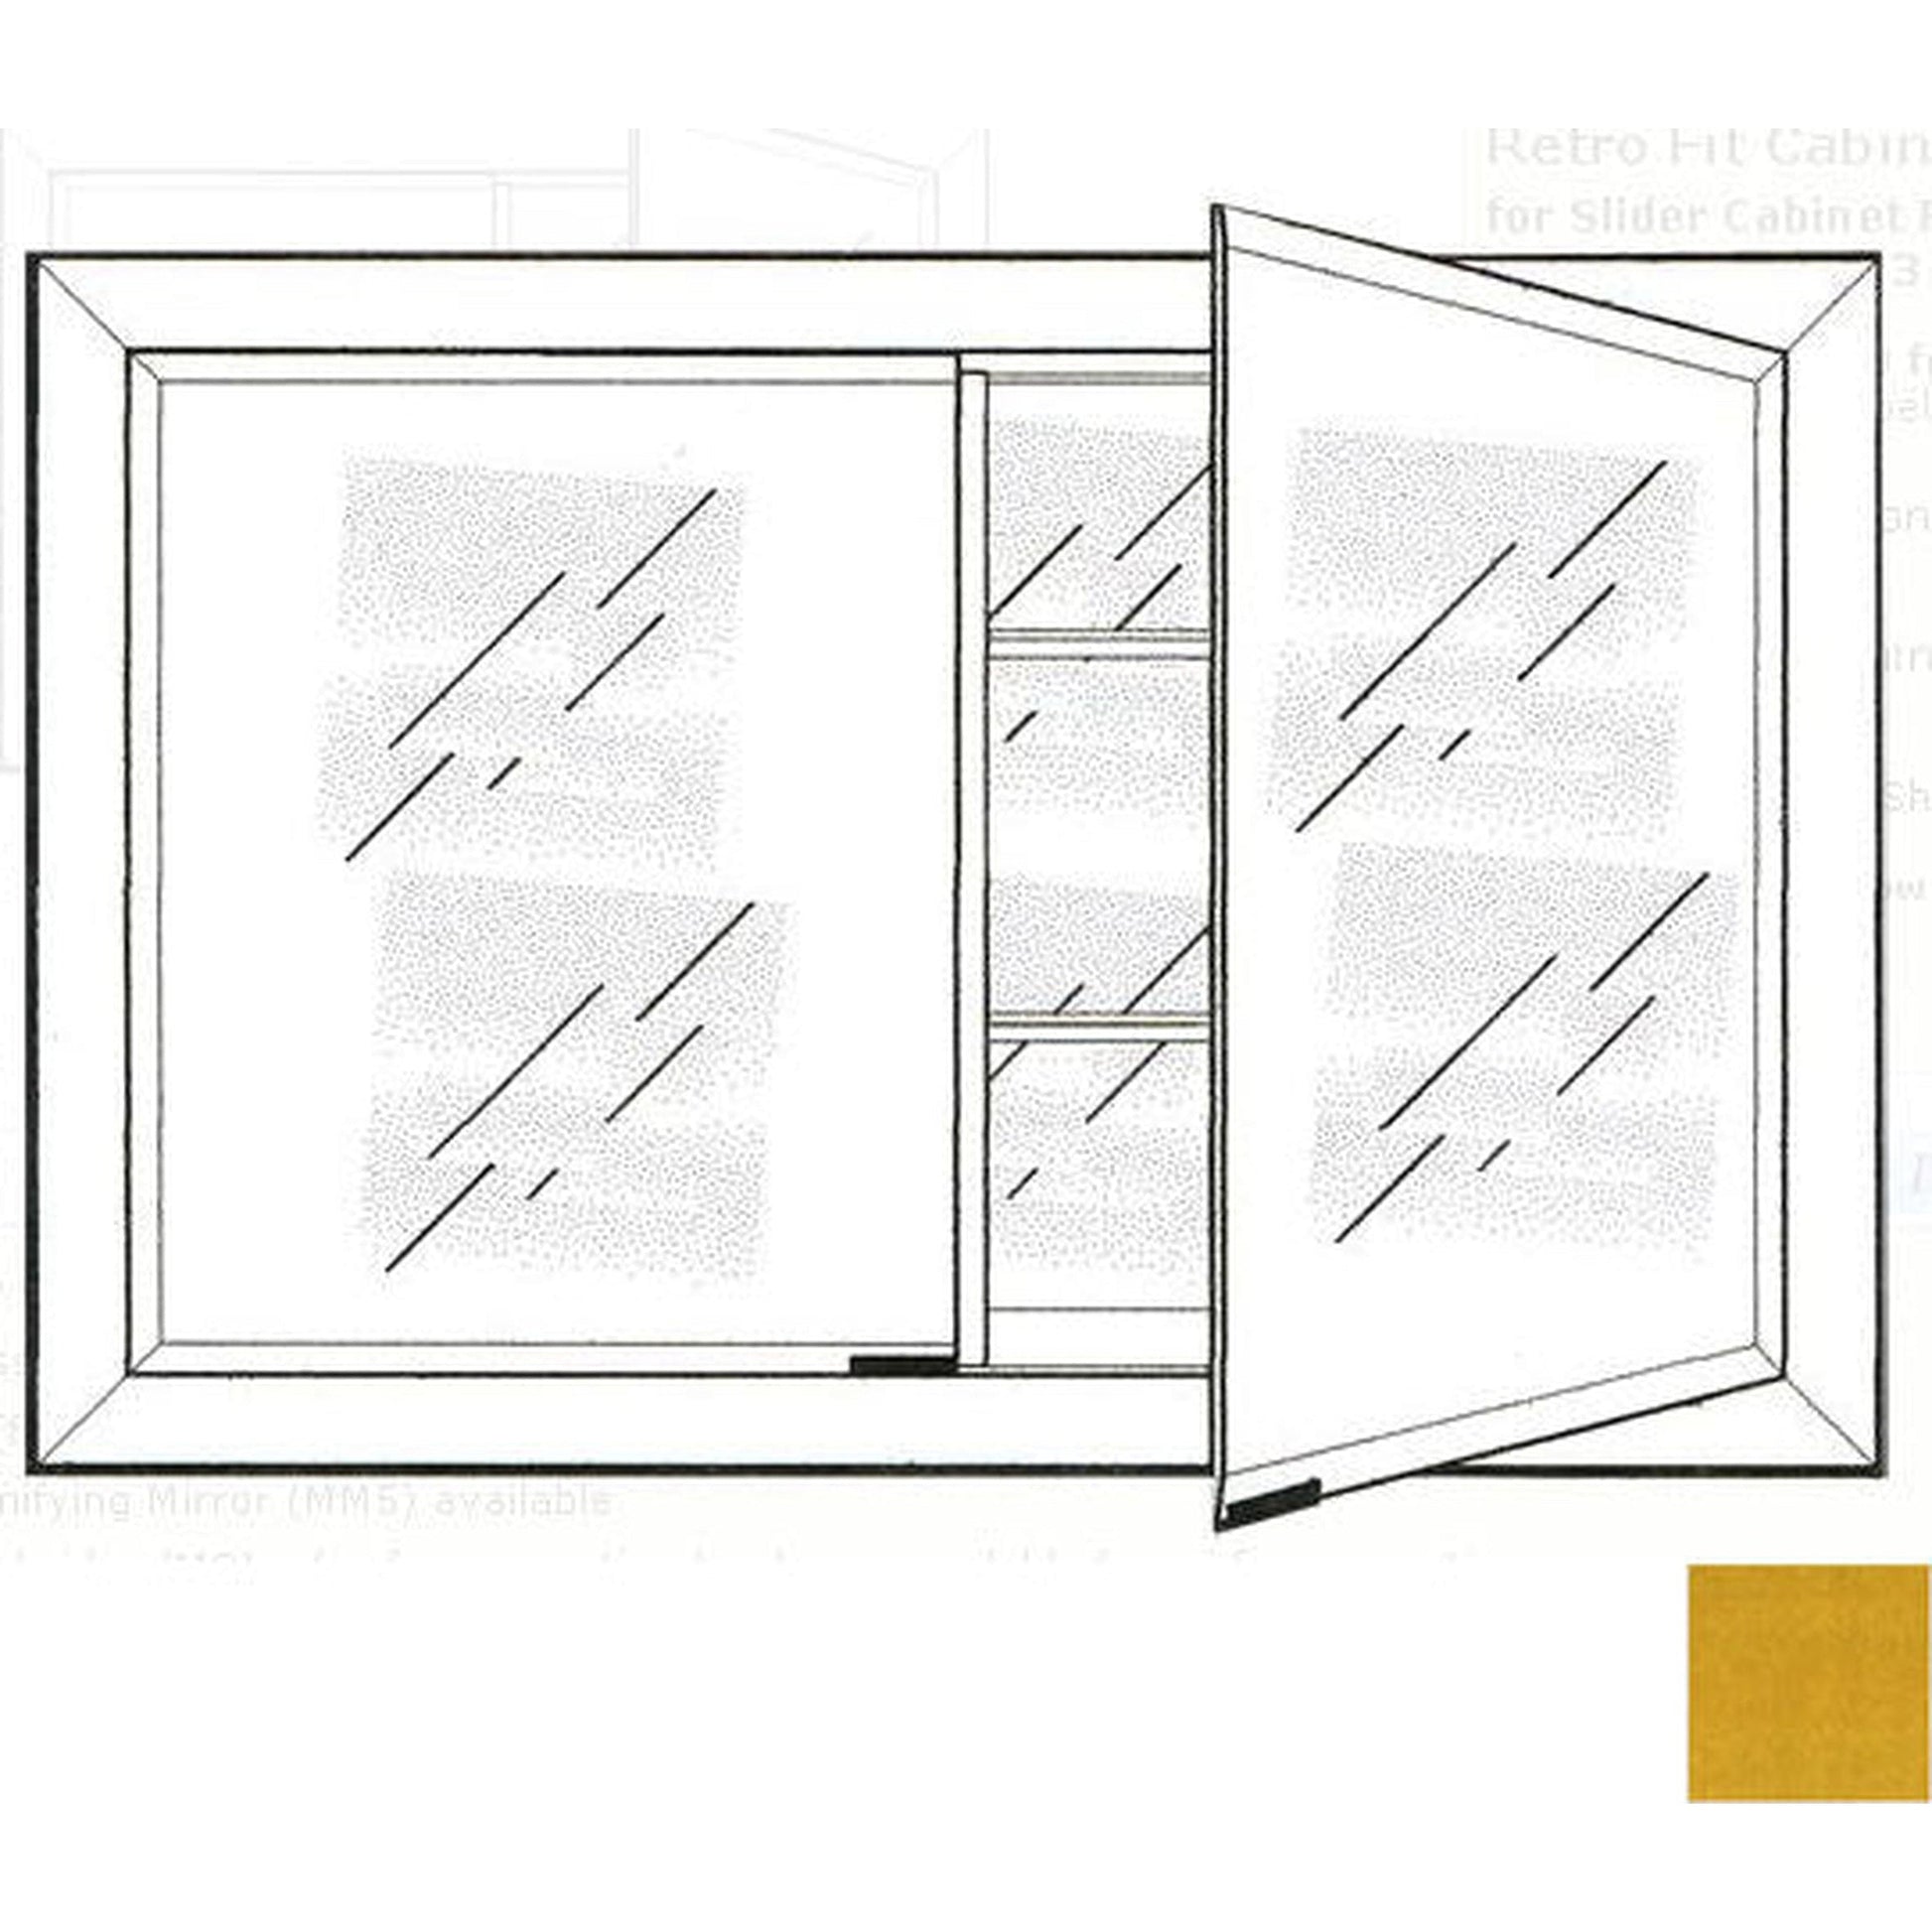 Afina Signature 27" x 21" Colorgrain Yellow Recessed Retro-Fit Double Door Medicine Cabinet With Beveled Edge Mirror